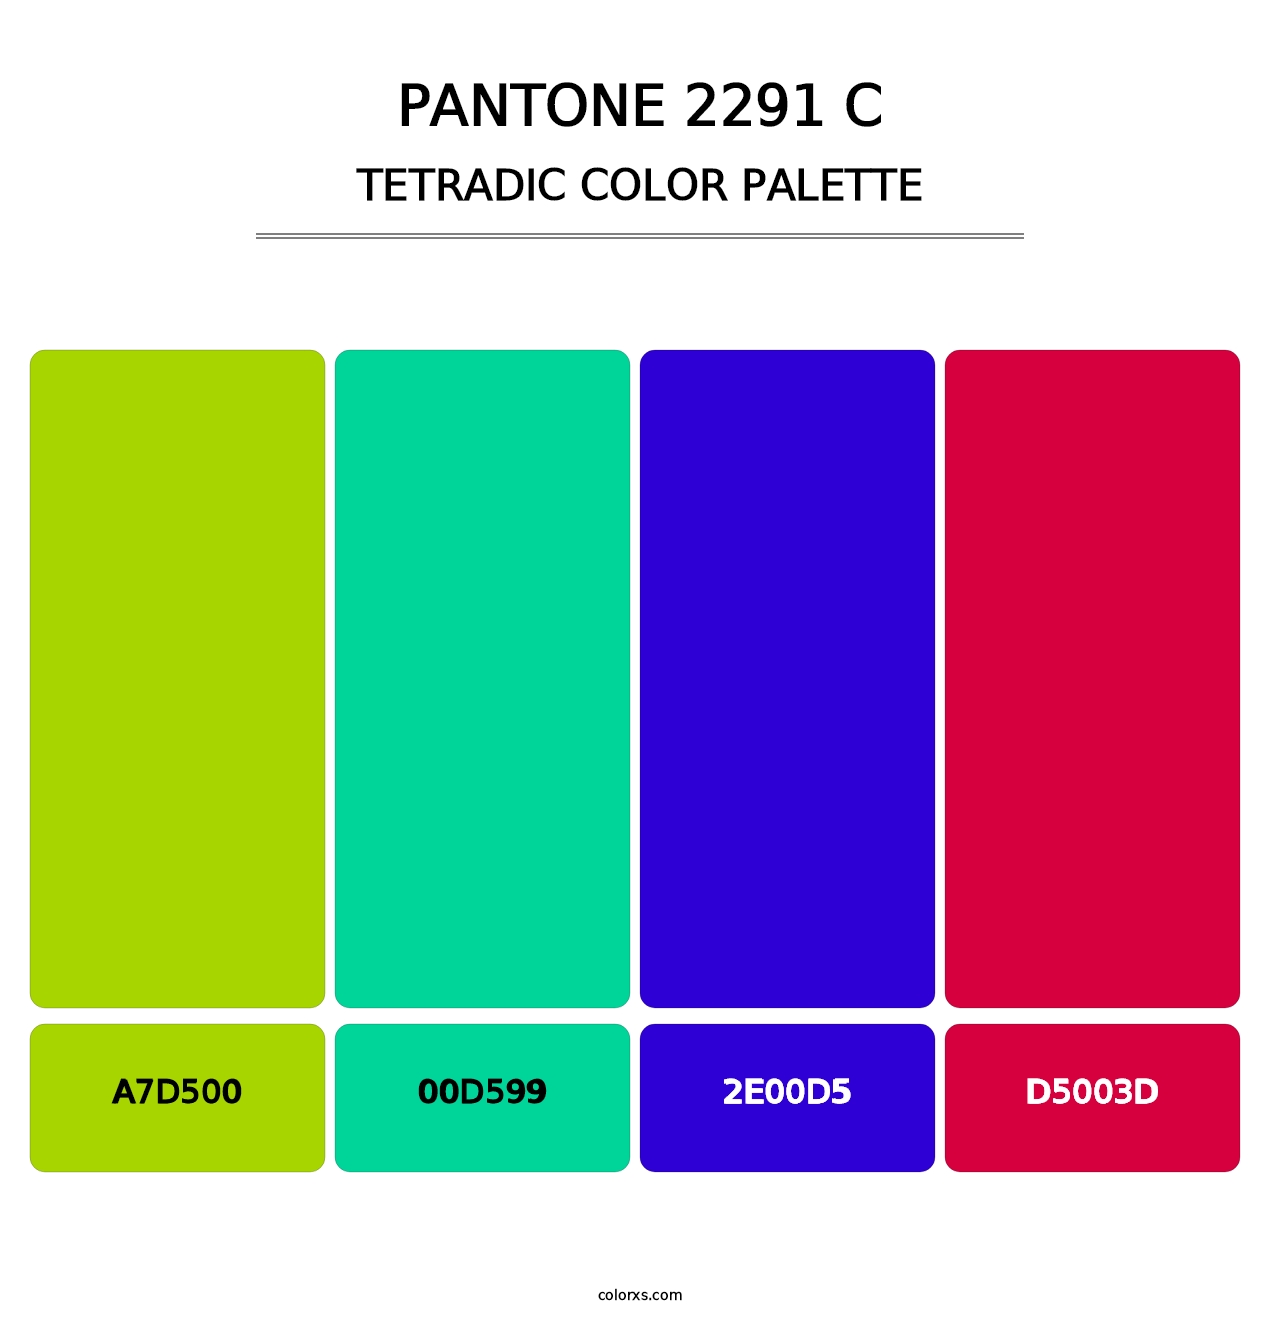 PANTONE 2291 C - Tetradic Color Palette